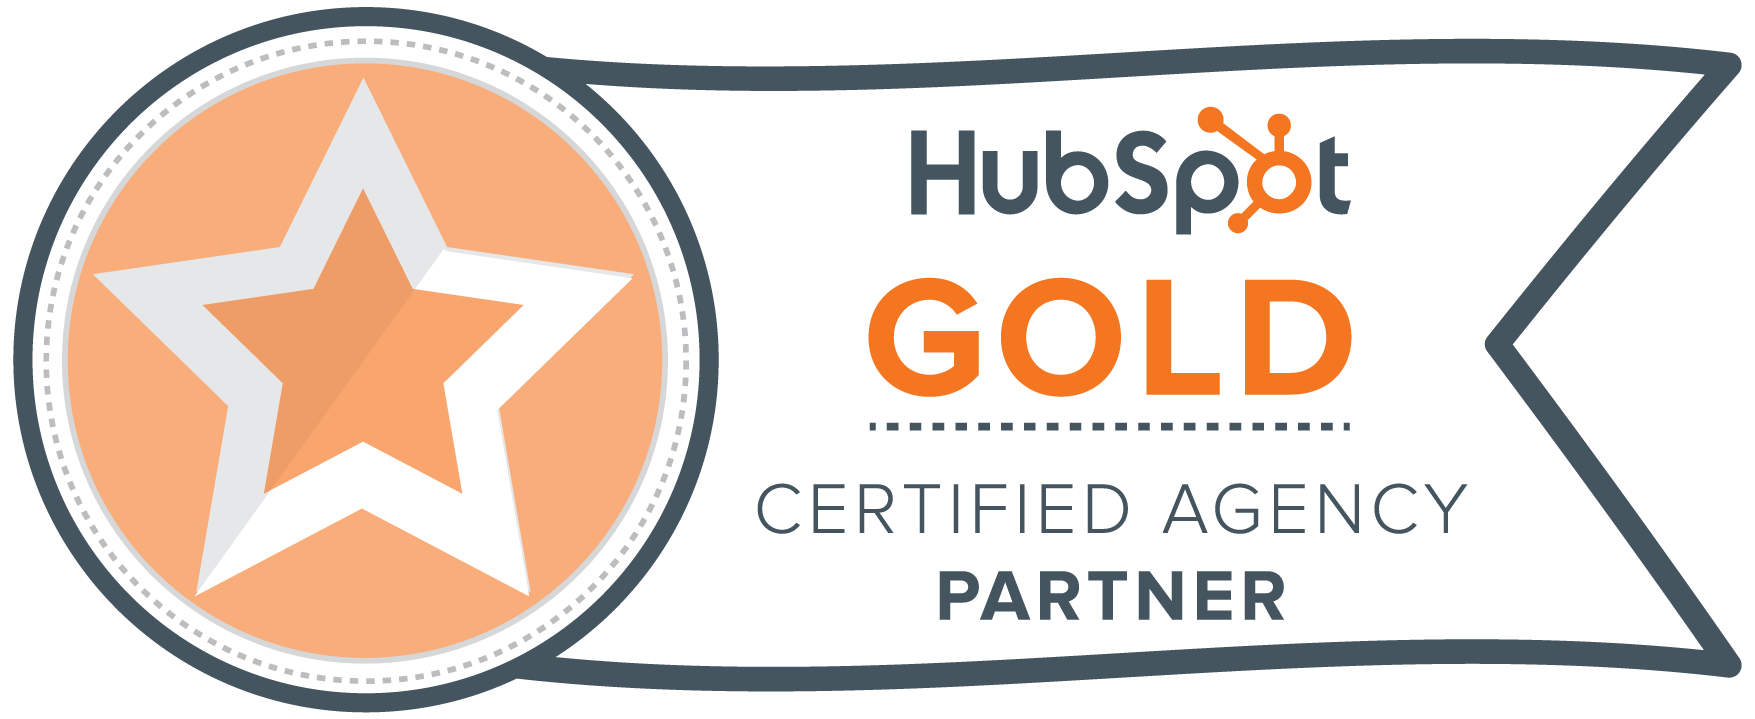 HubSpot Gold Certified Agency Partner